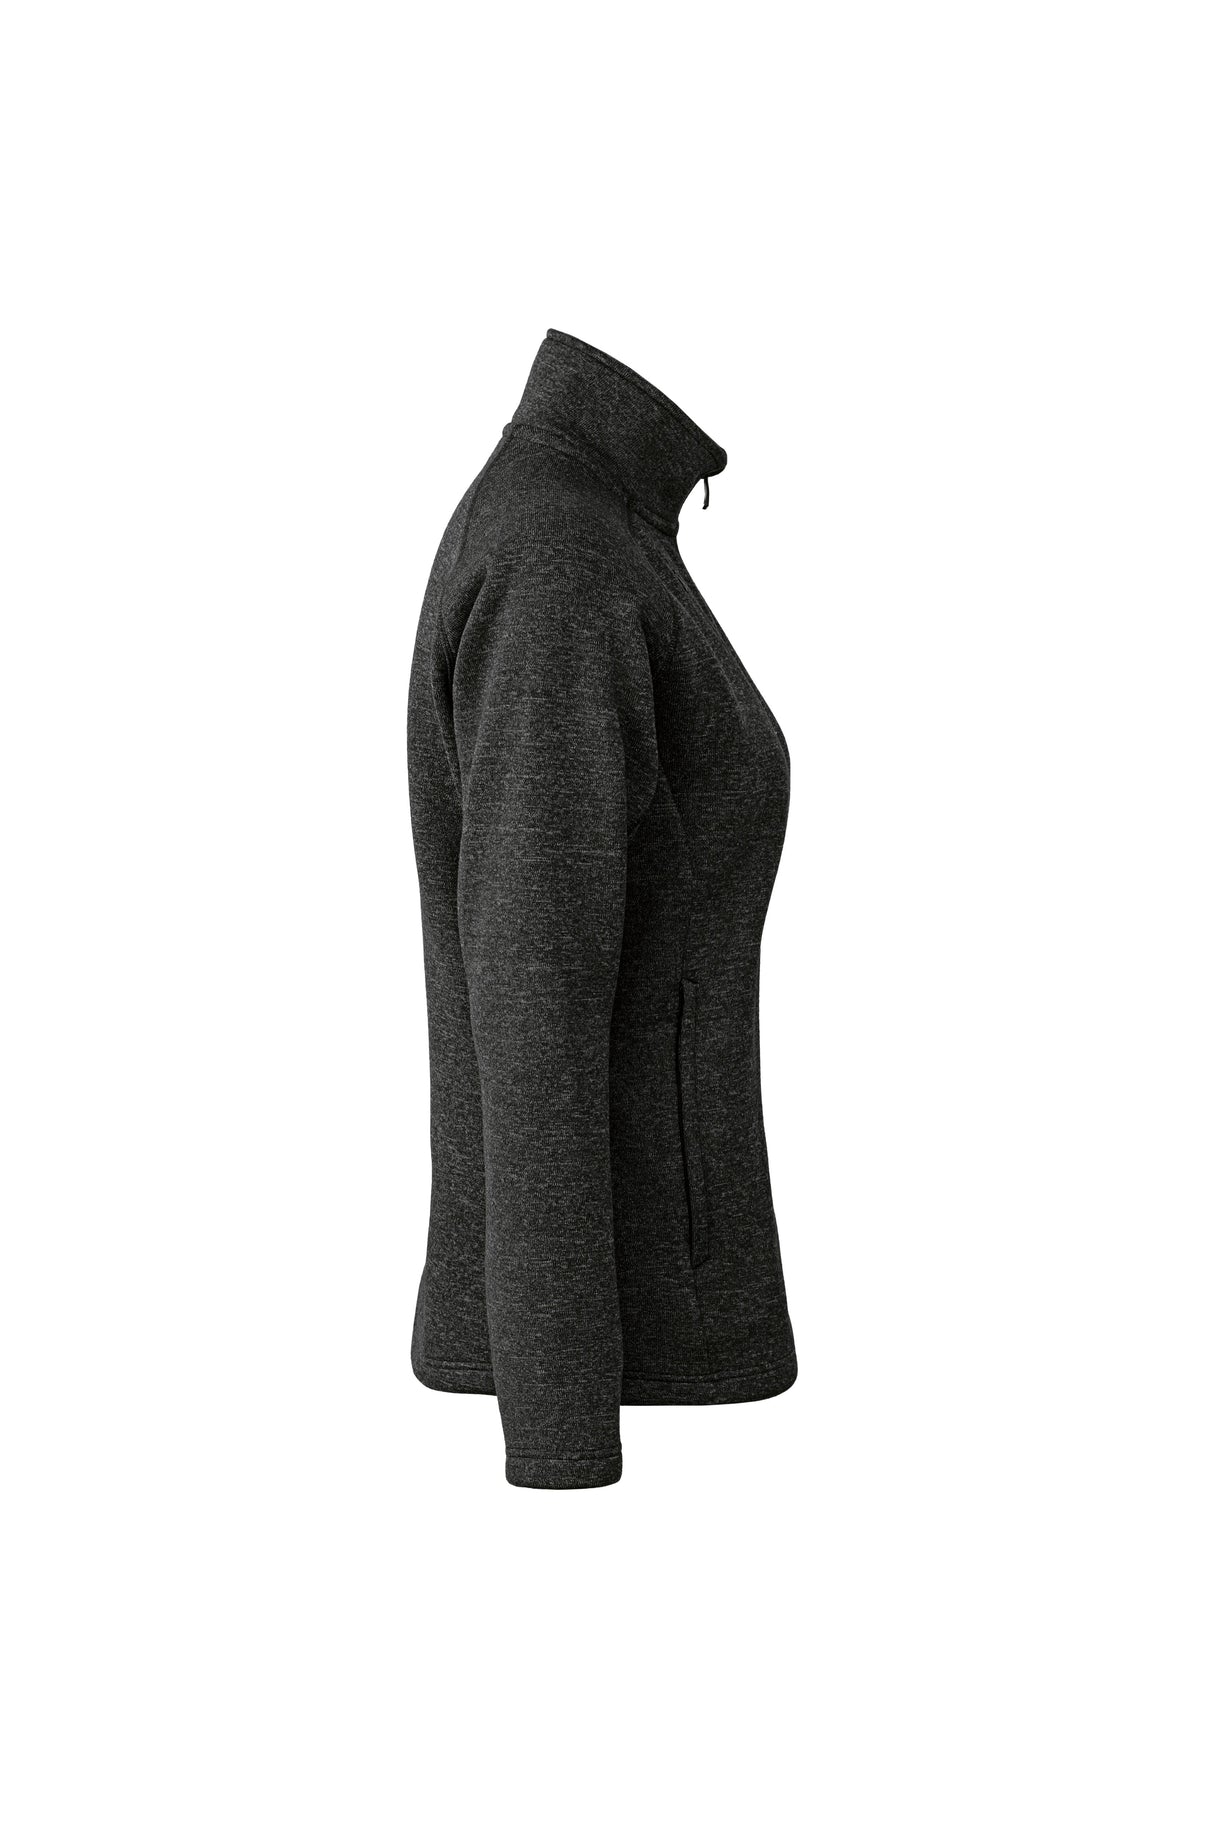 Nimbus Play Women's Montana – Knitted Fleece Jacket